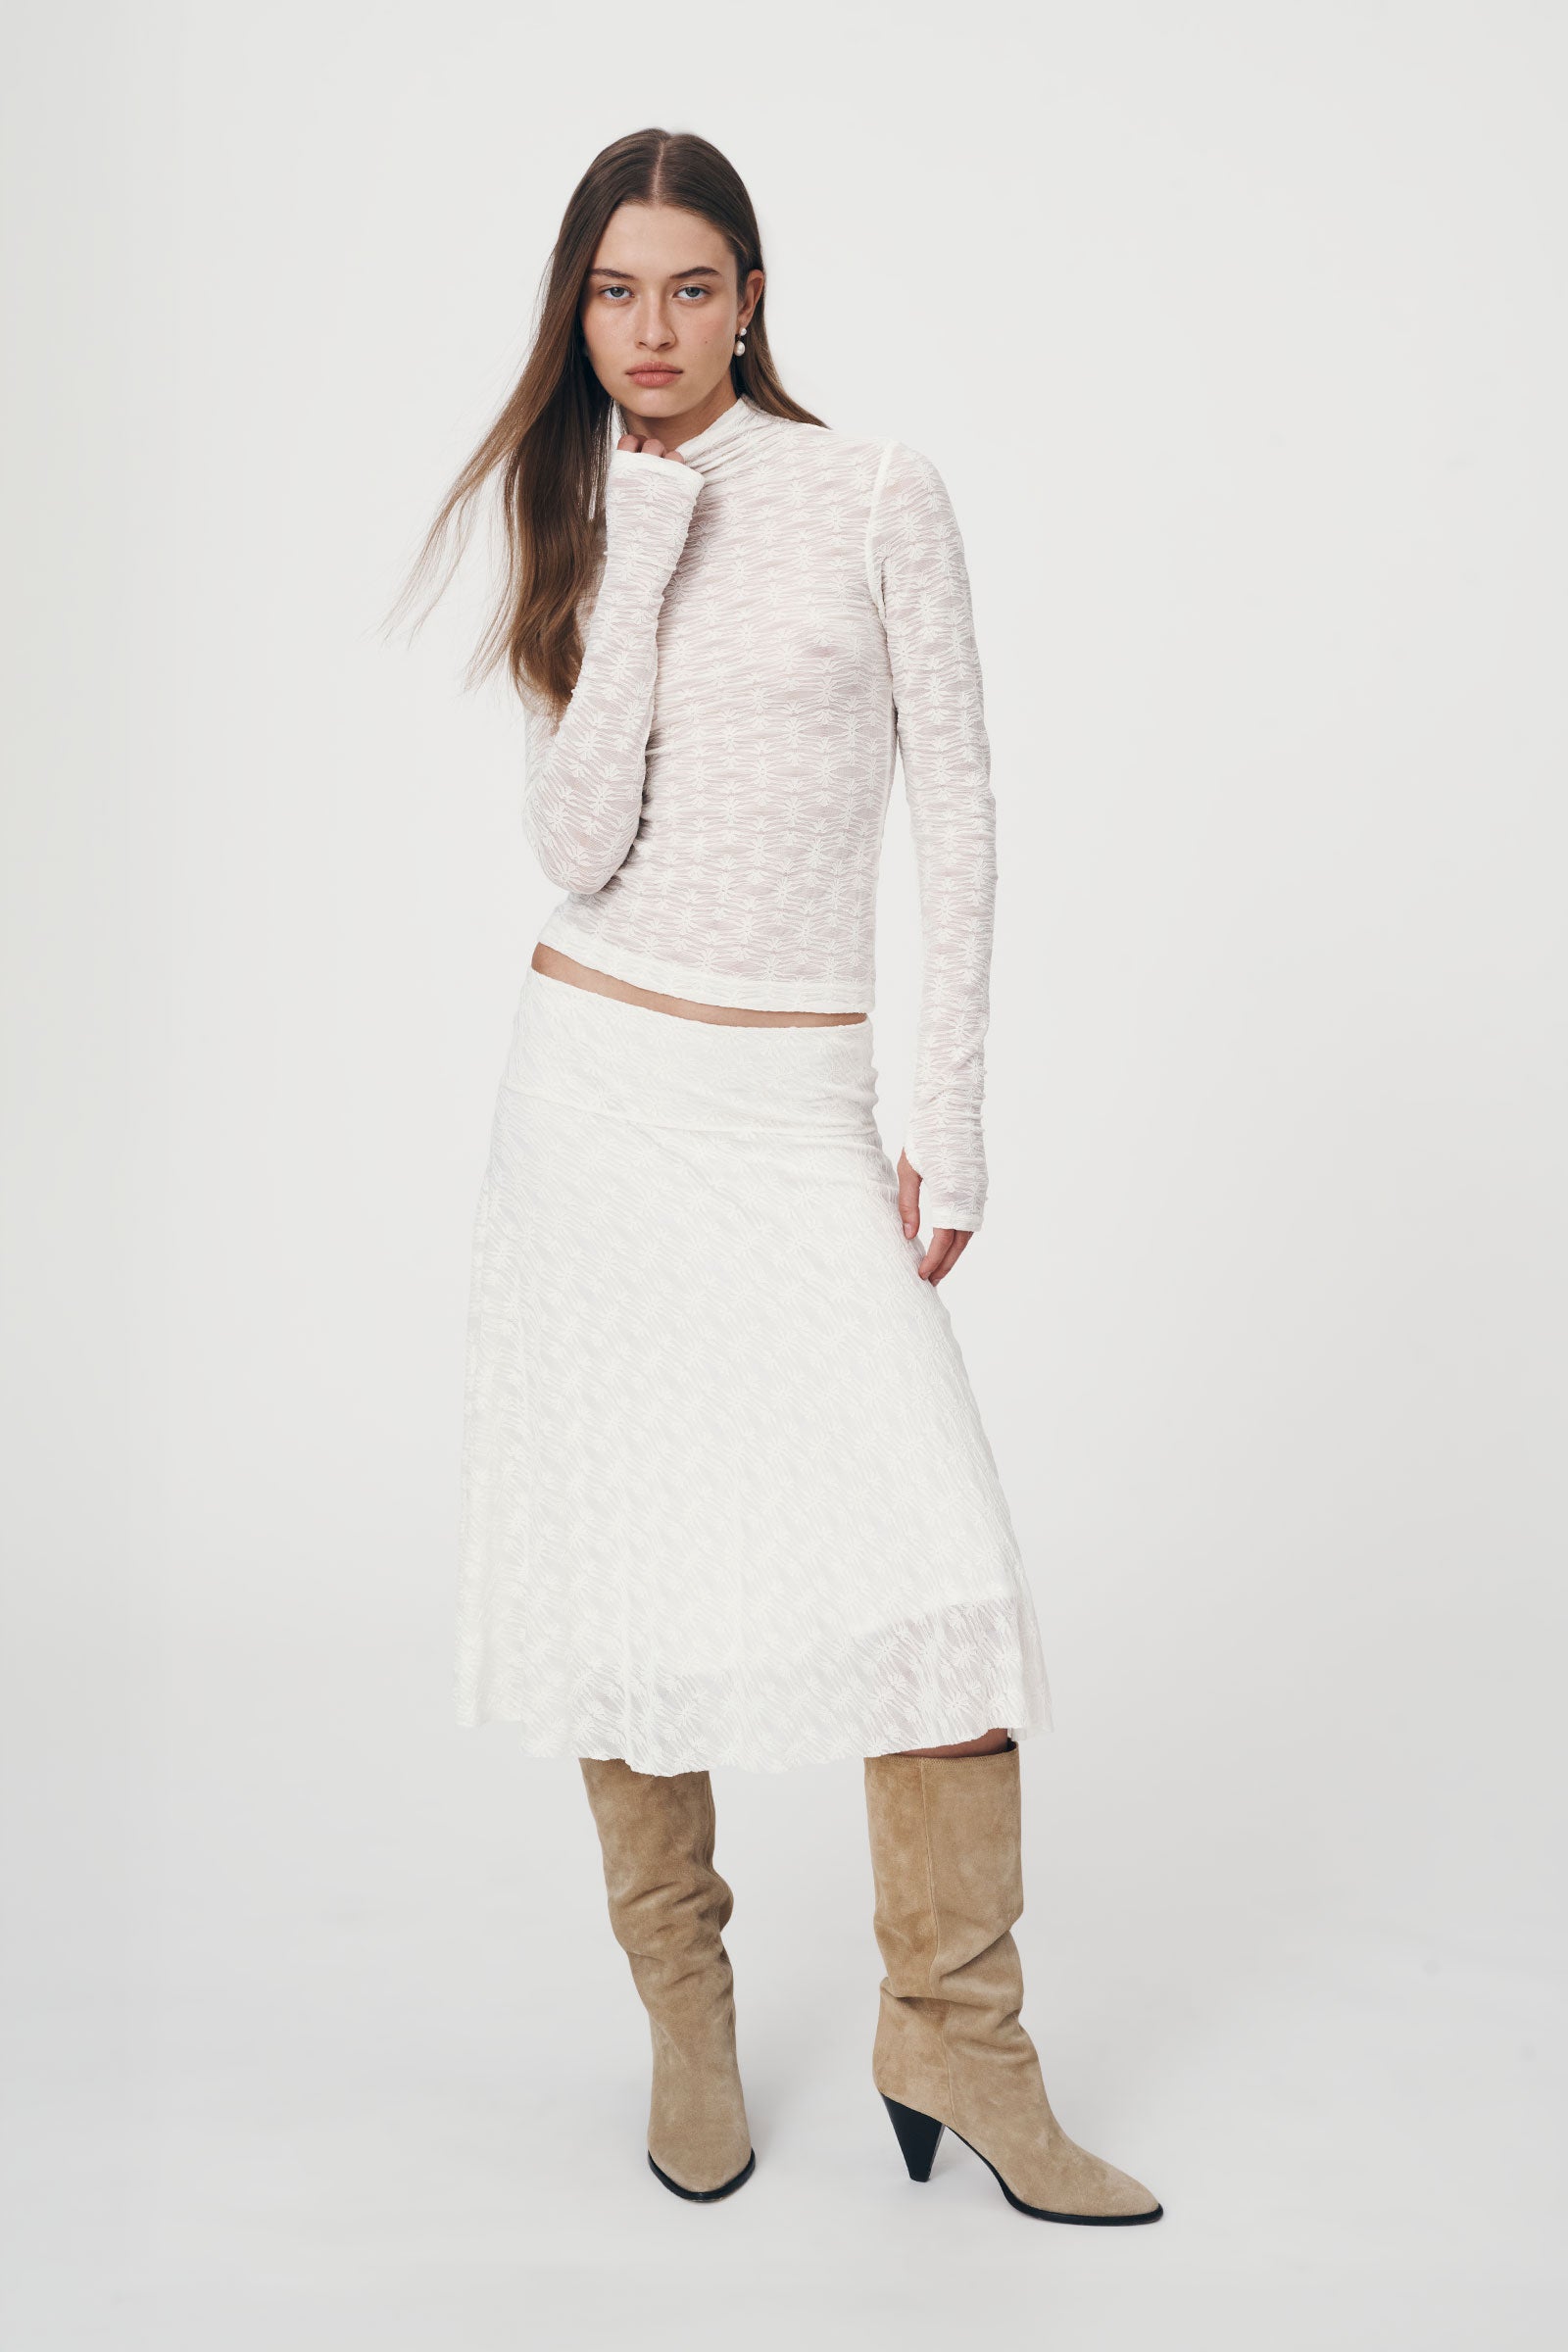 Lydia Flower Lace Midi Skirt